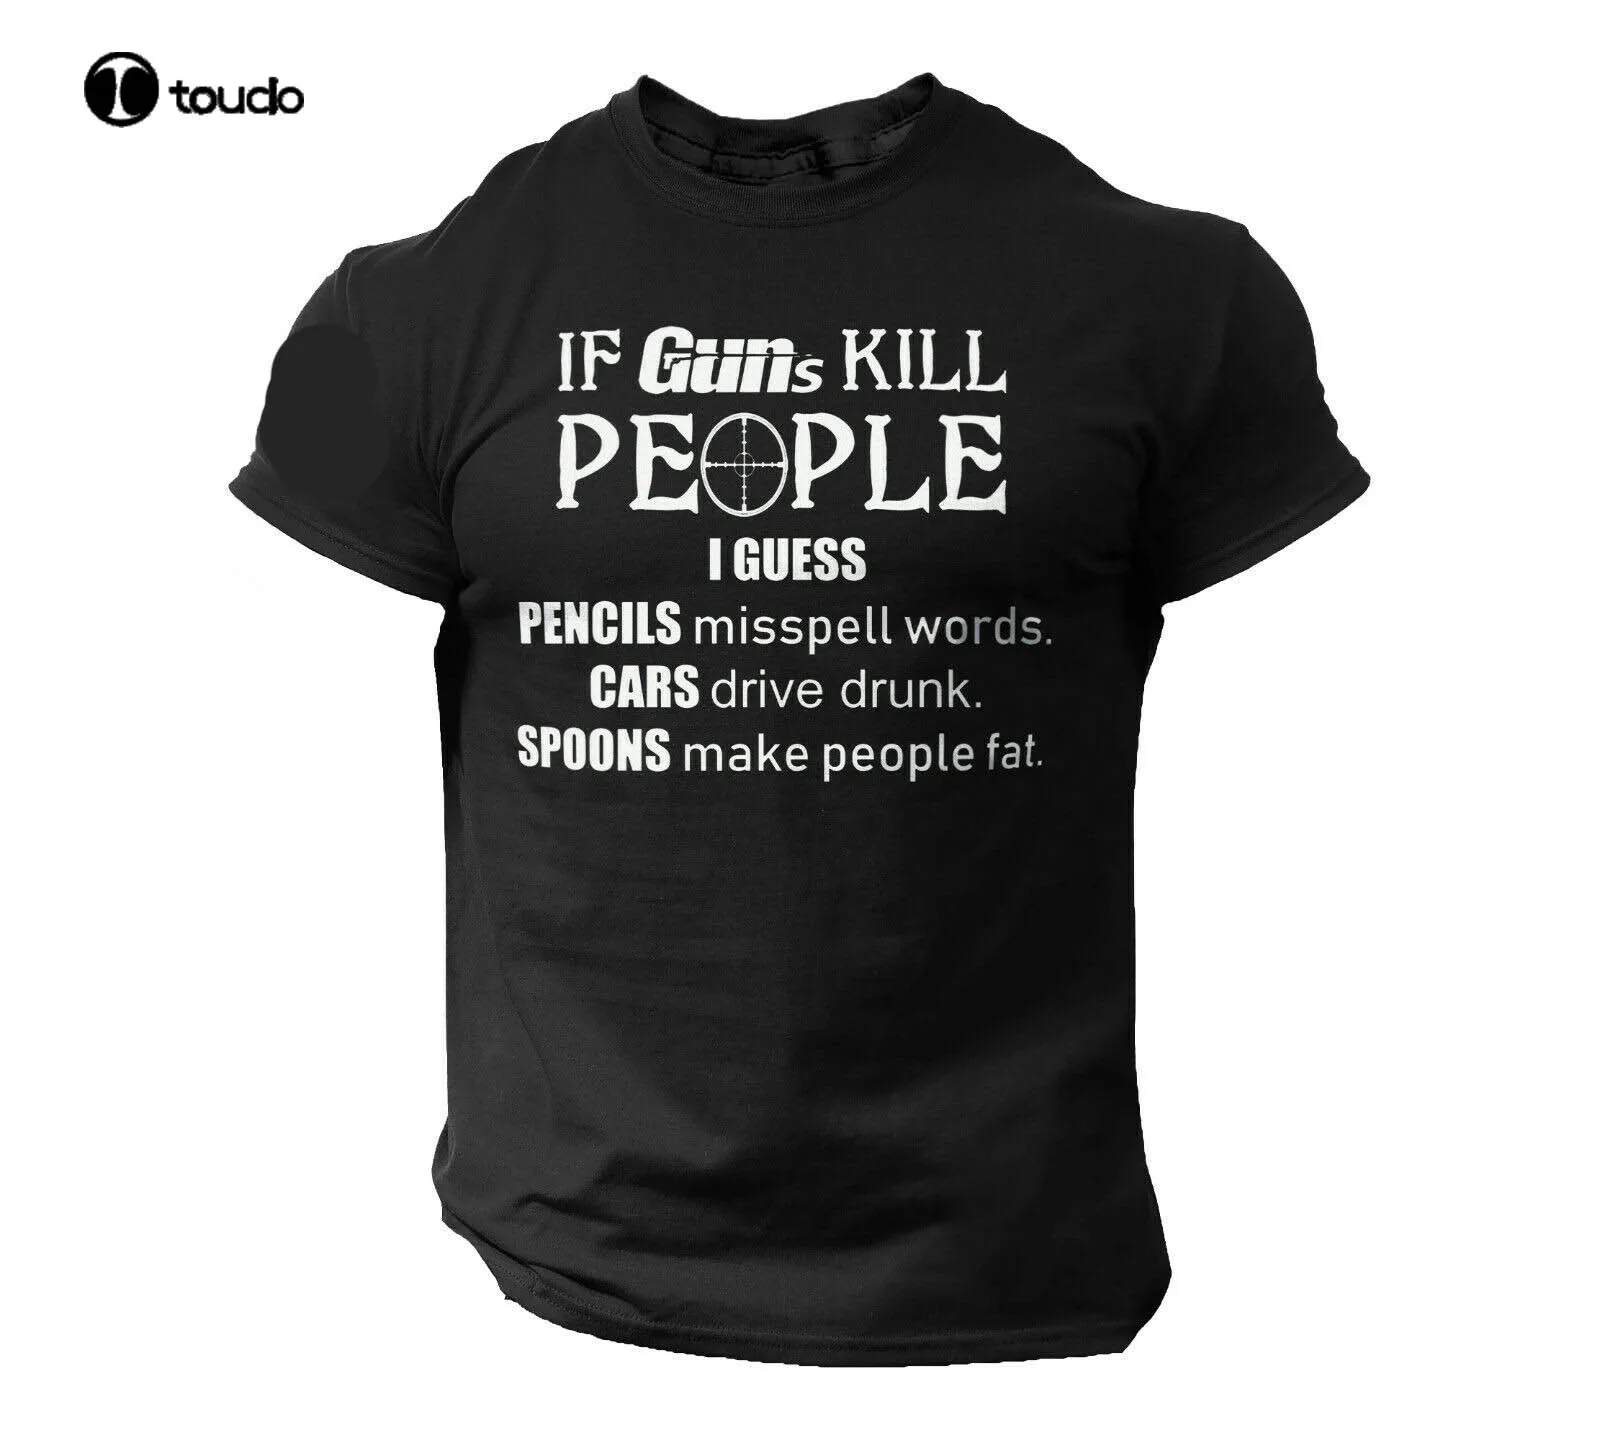 

If Guns Kill People T-Shirt Gun Rights Funny 2nd Amendment Veteran USA Flag